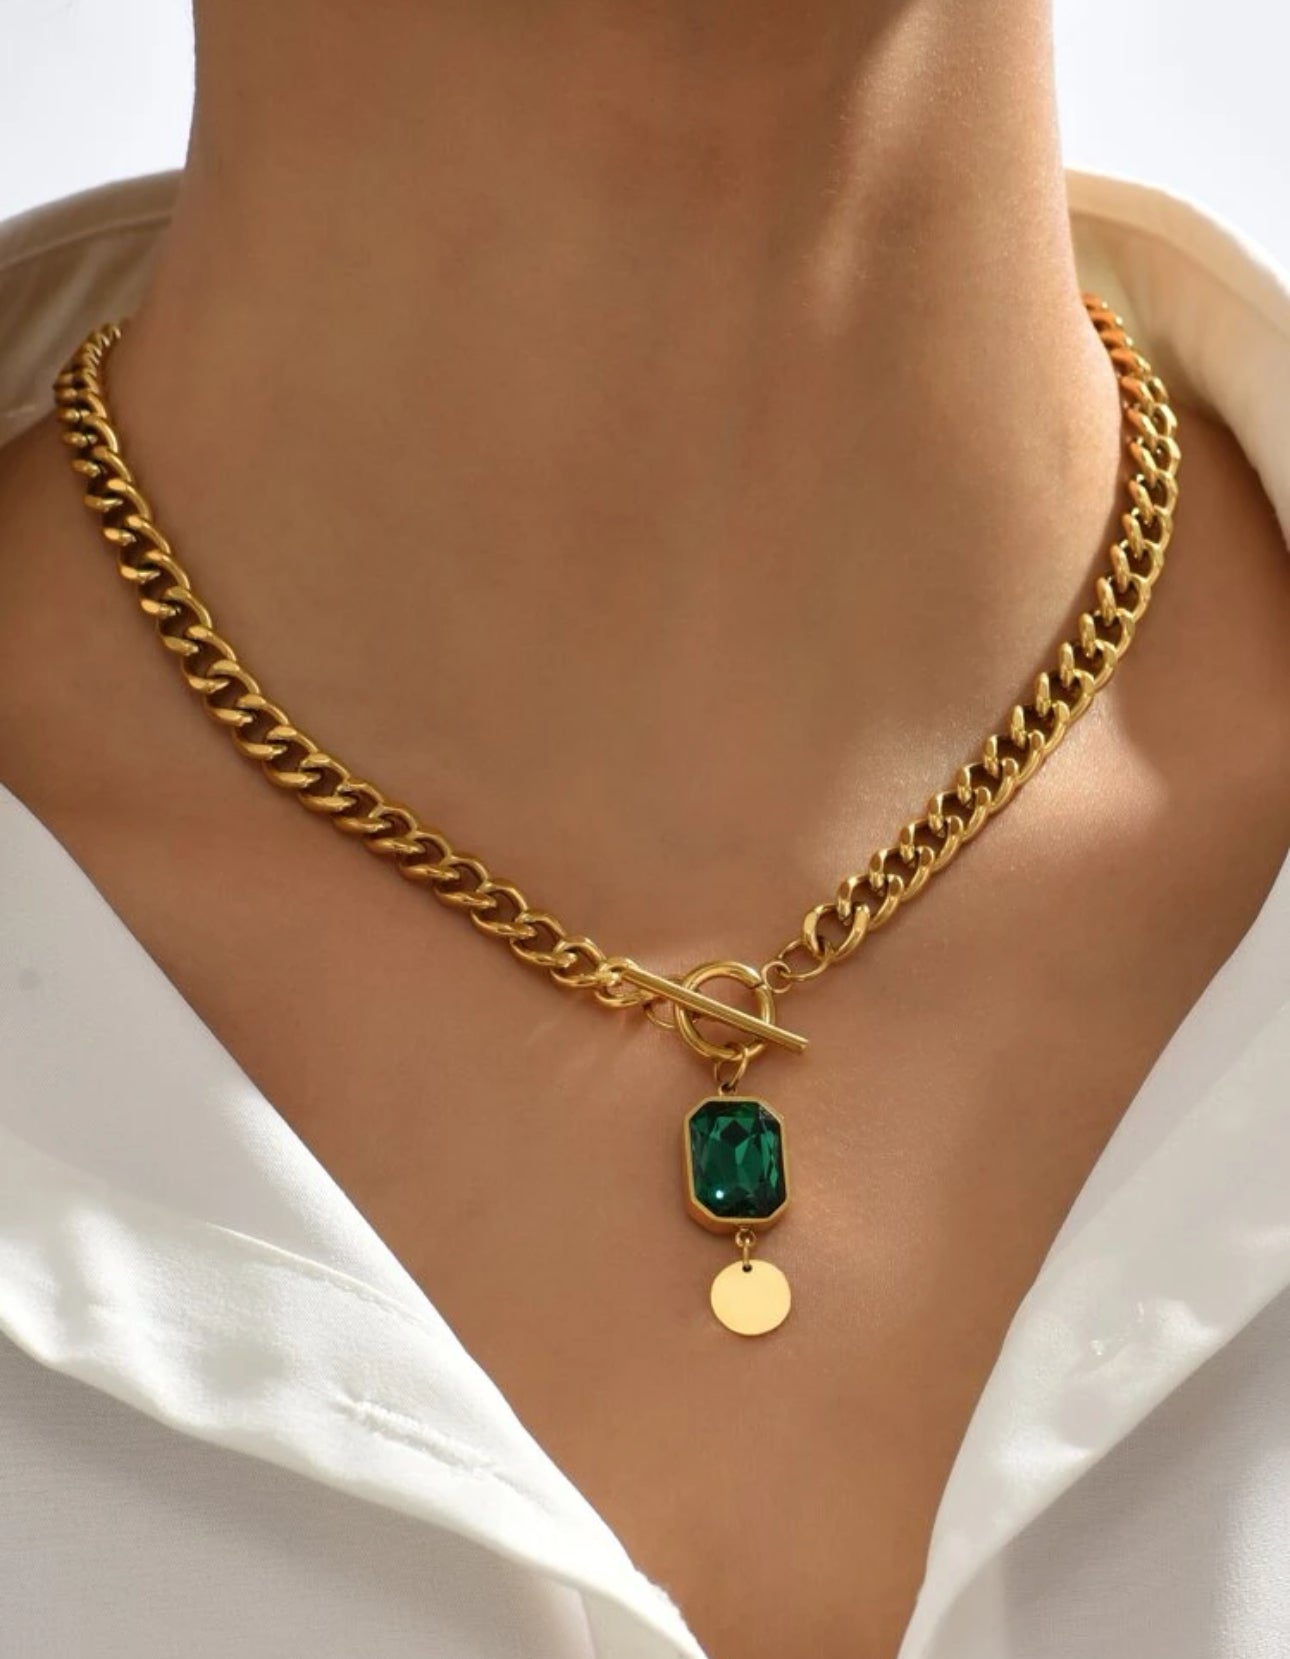 Elegance Unlocked: Golden Lurex Necklace with Emerald Pendant